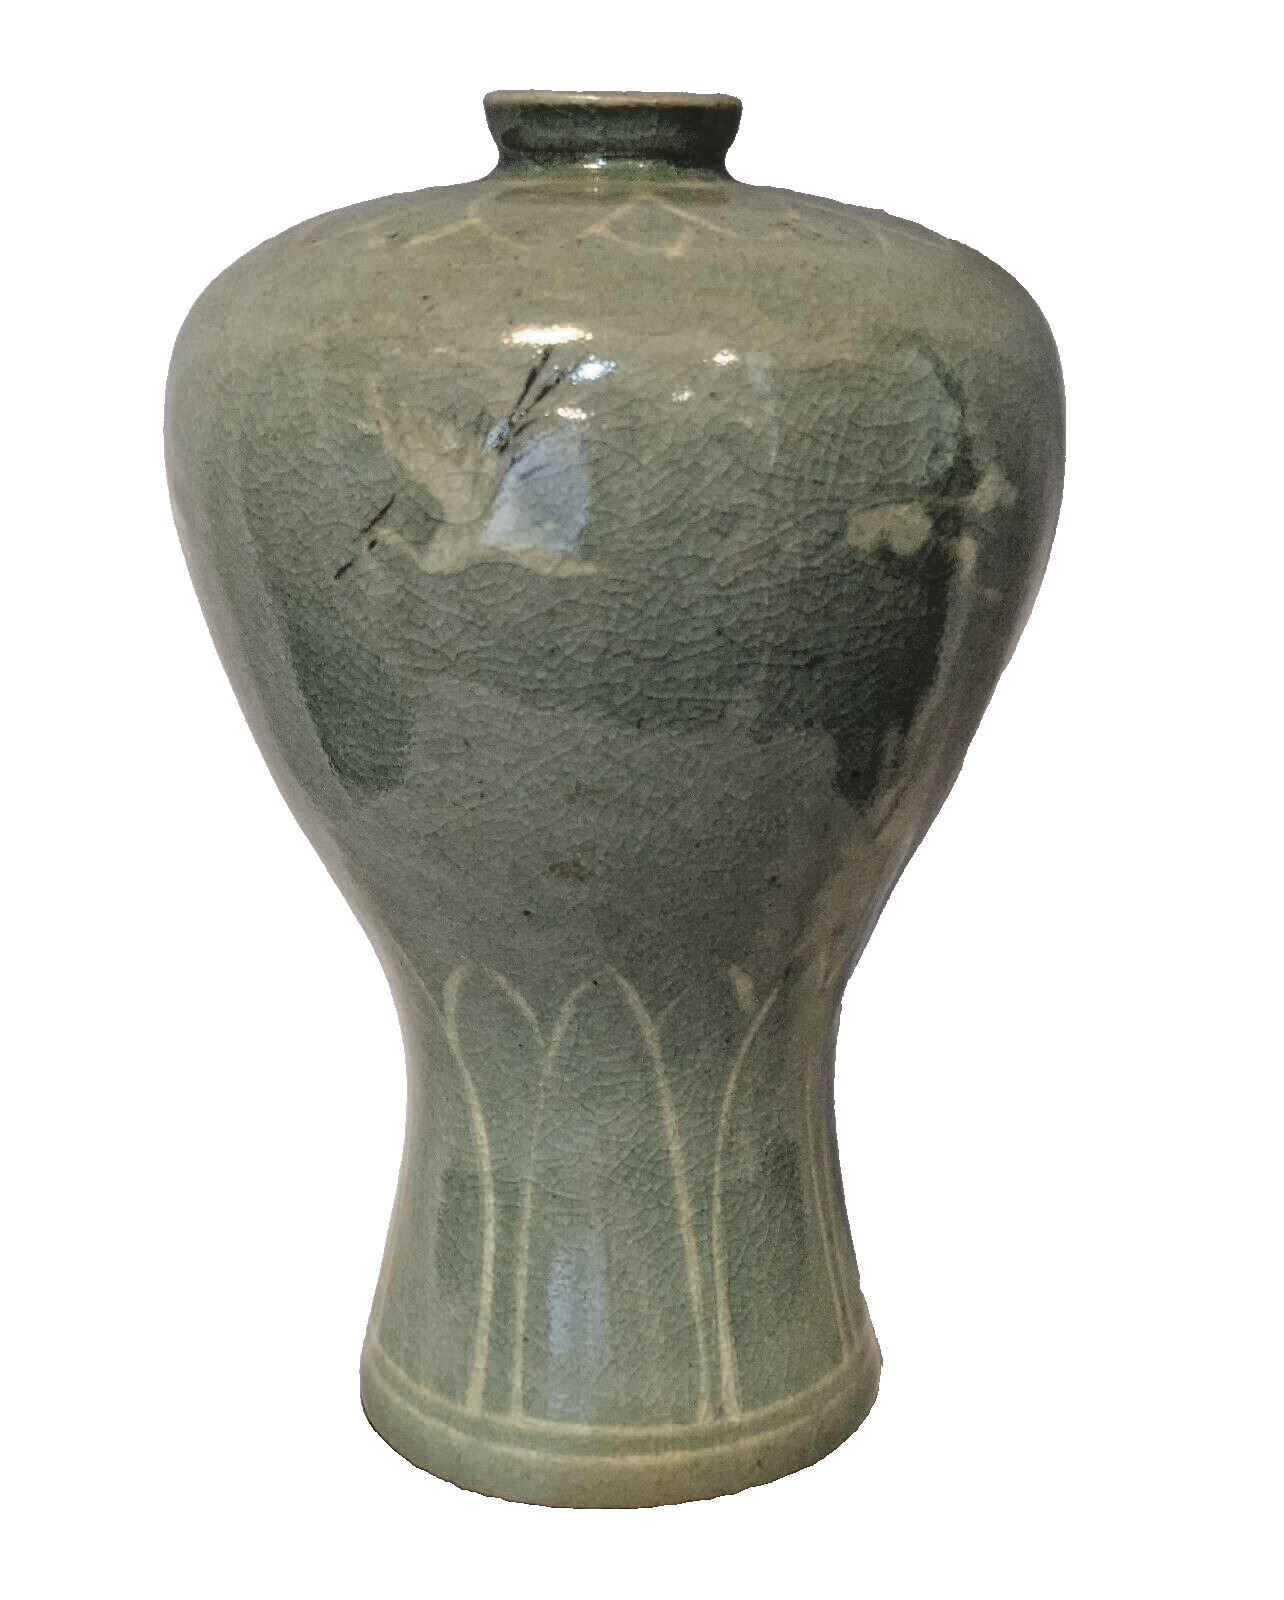 Korean Slip Celadon Maebyeong Vase, Mid 20th Century 7.5 in ht No marks